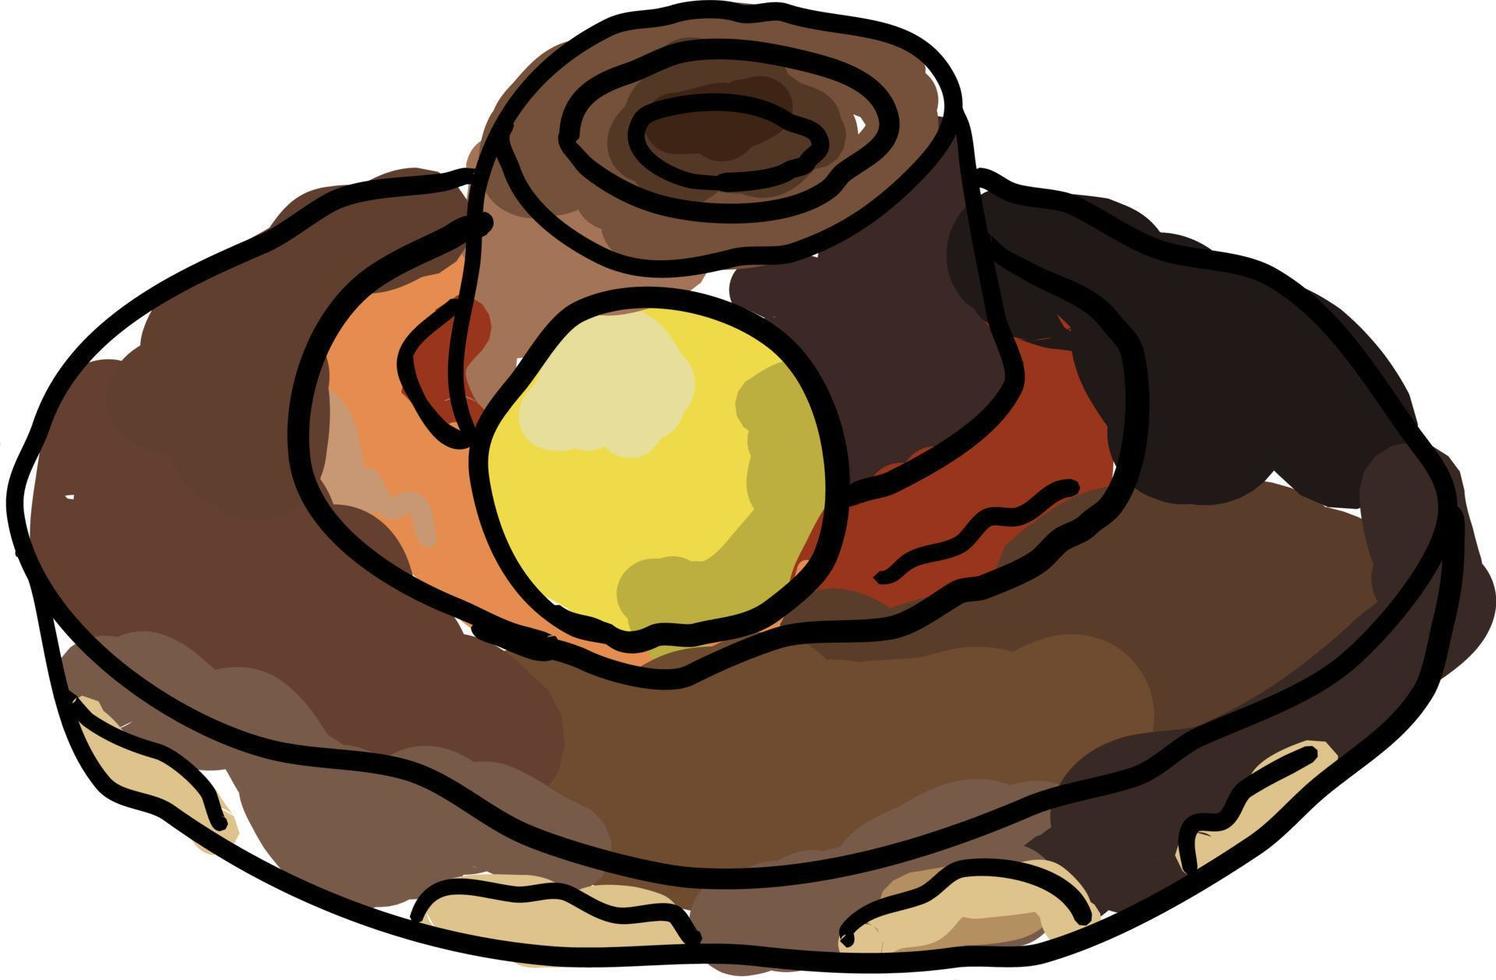 Pilgrim Cookie Hats, illustration, vector on white background